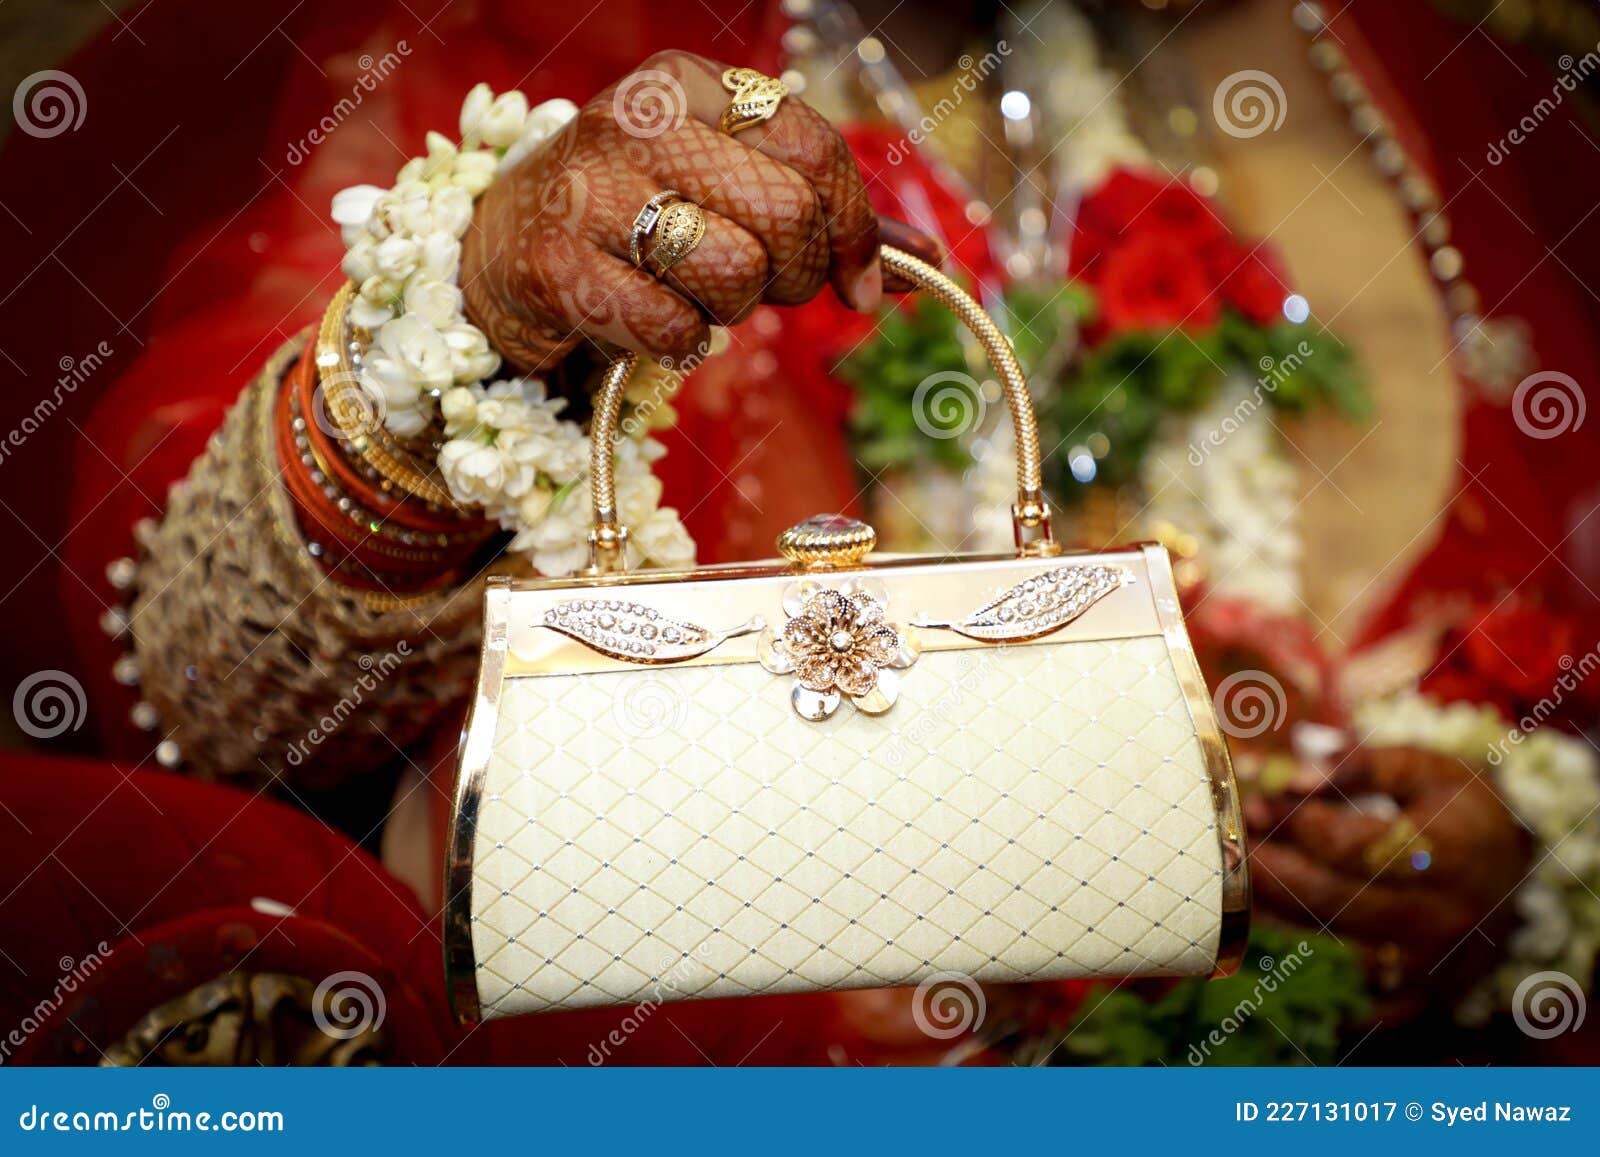 fcity.in - Purseo Silver Clutch Pearl Purses For Women Handbag Bridal  Evening